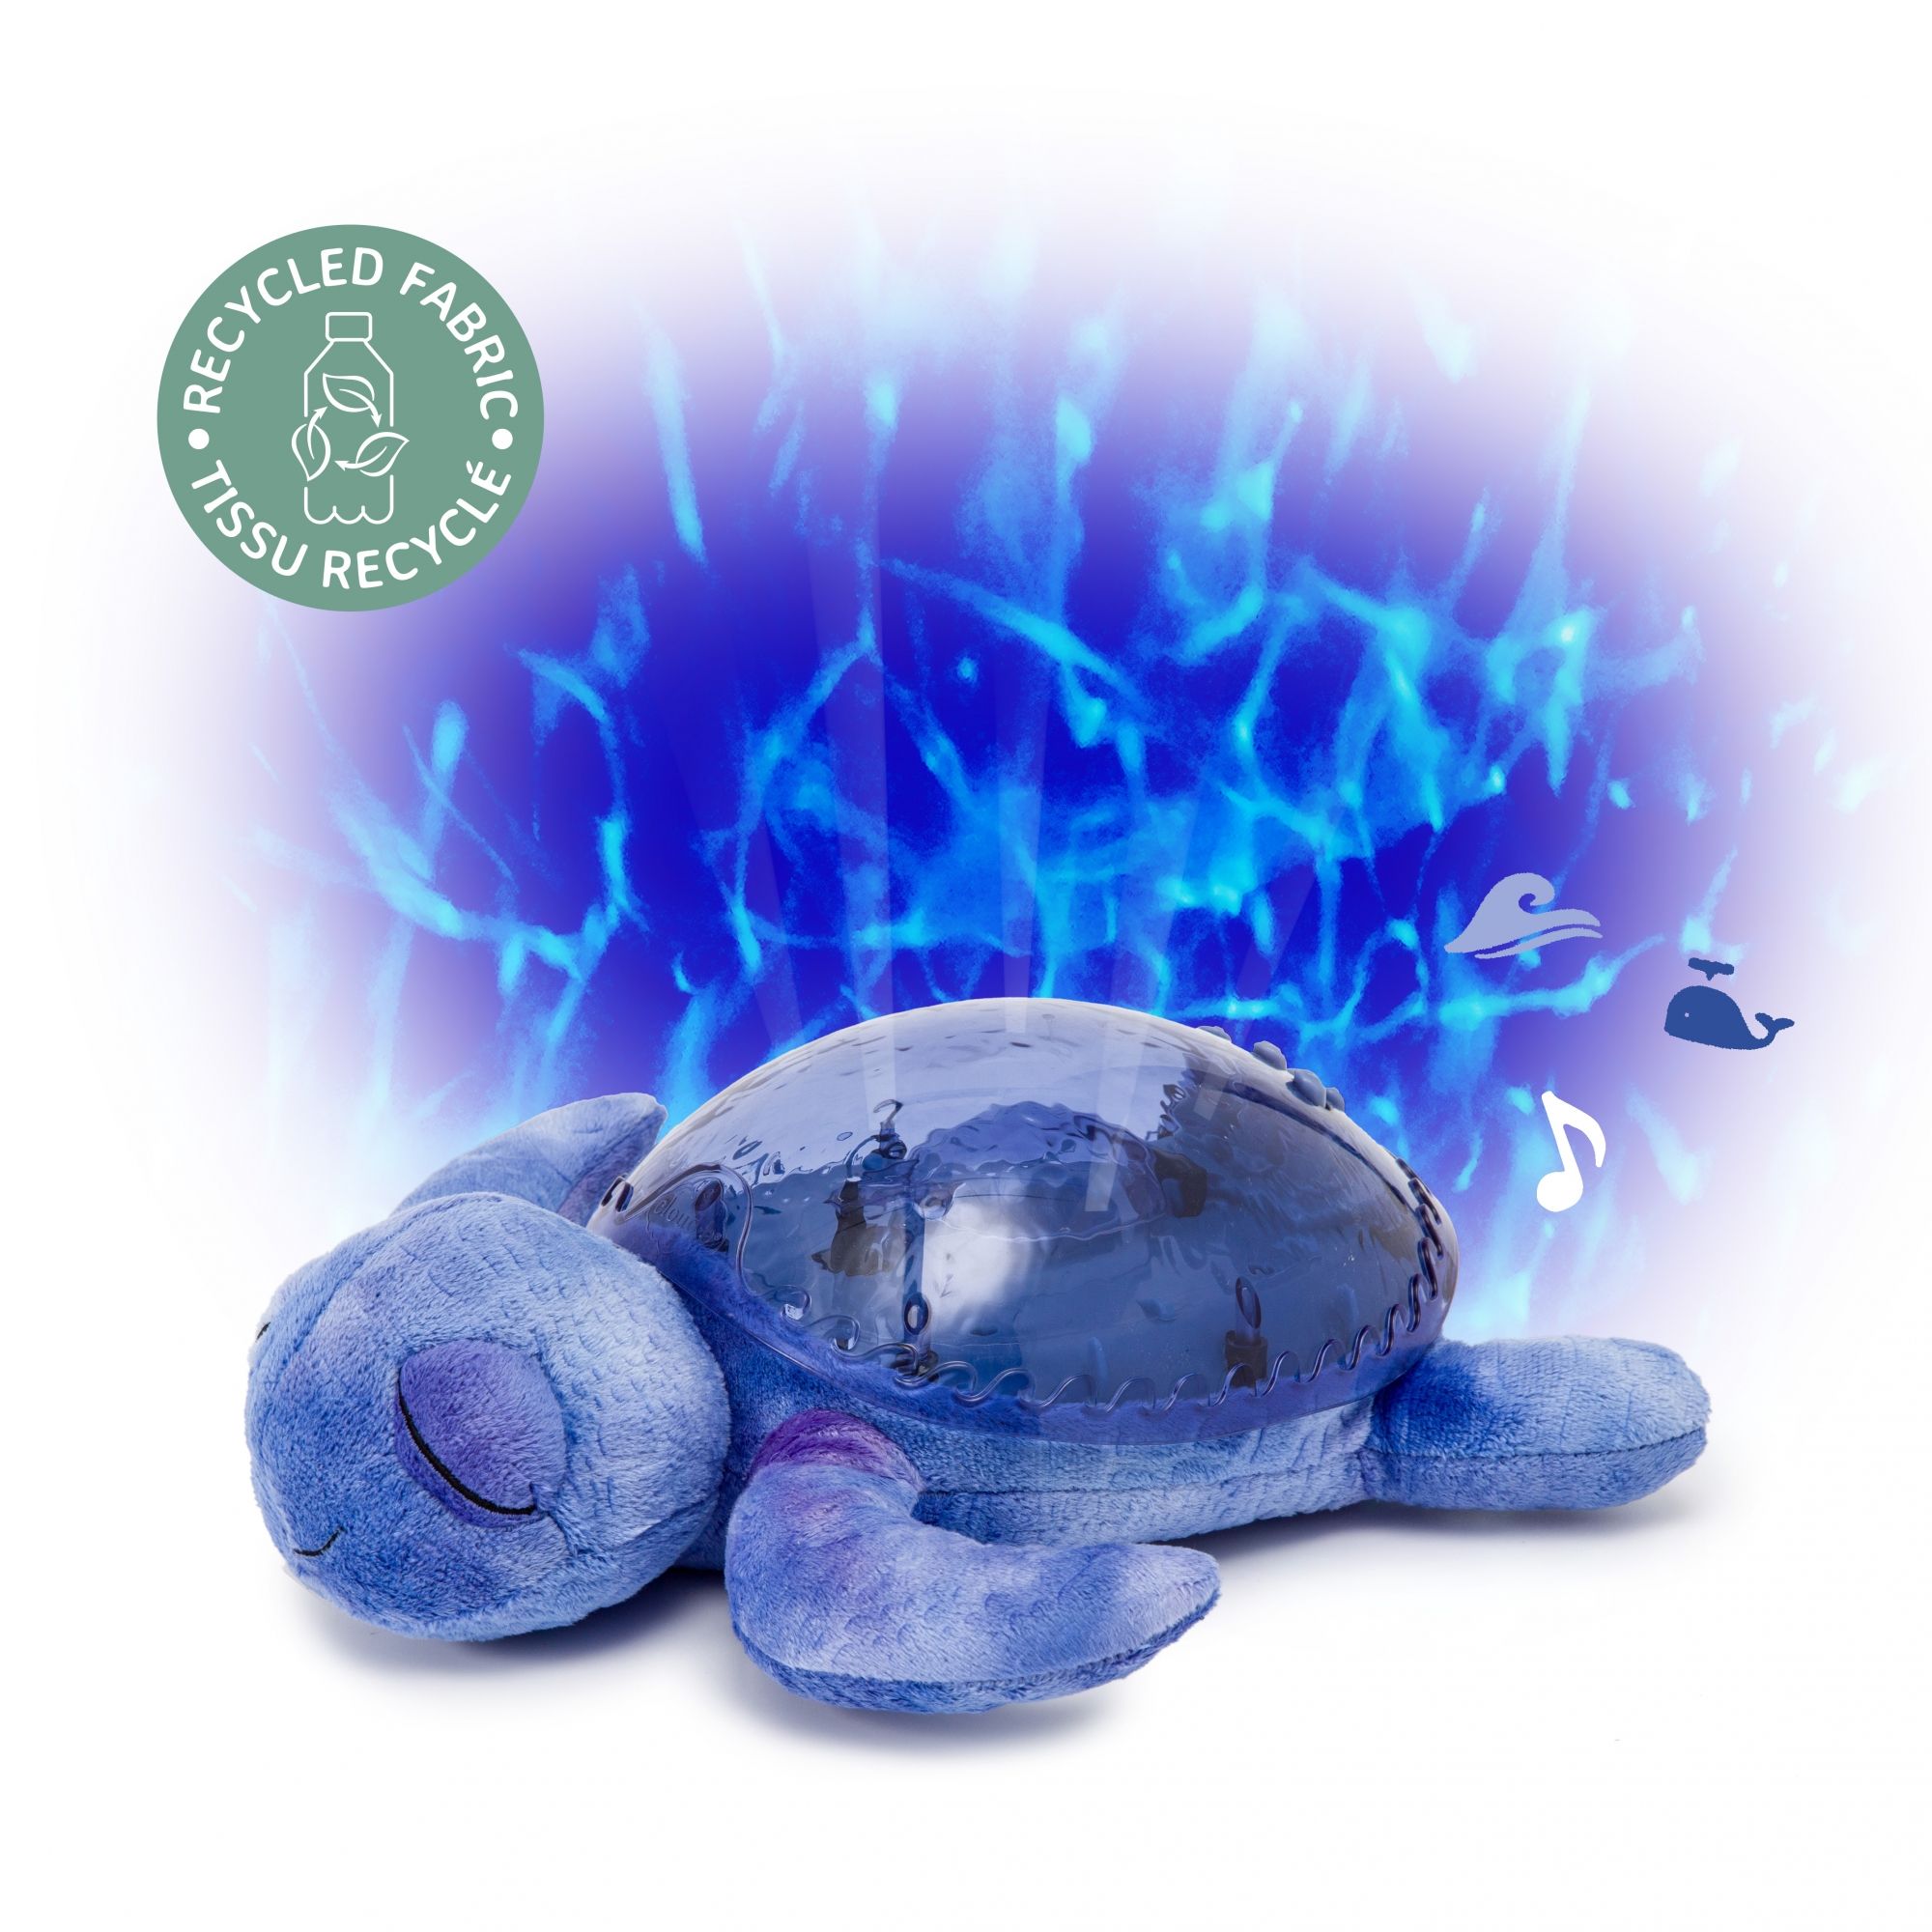 Peluche veilleuse projection musicale tortue Tranquil Turtle® - Aqua